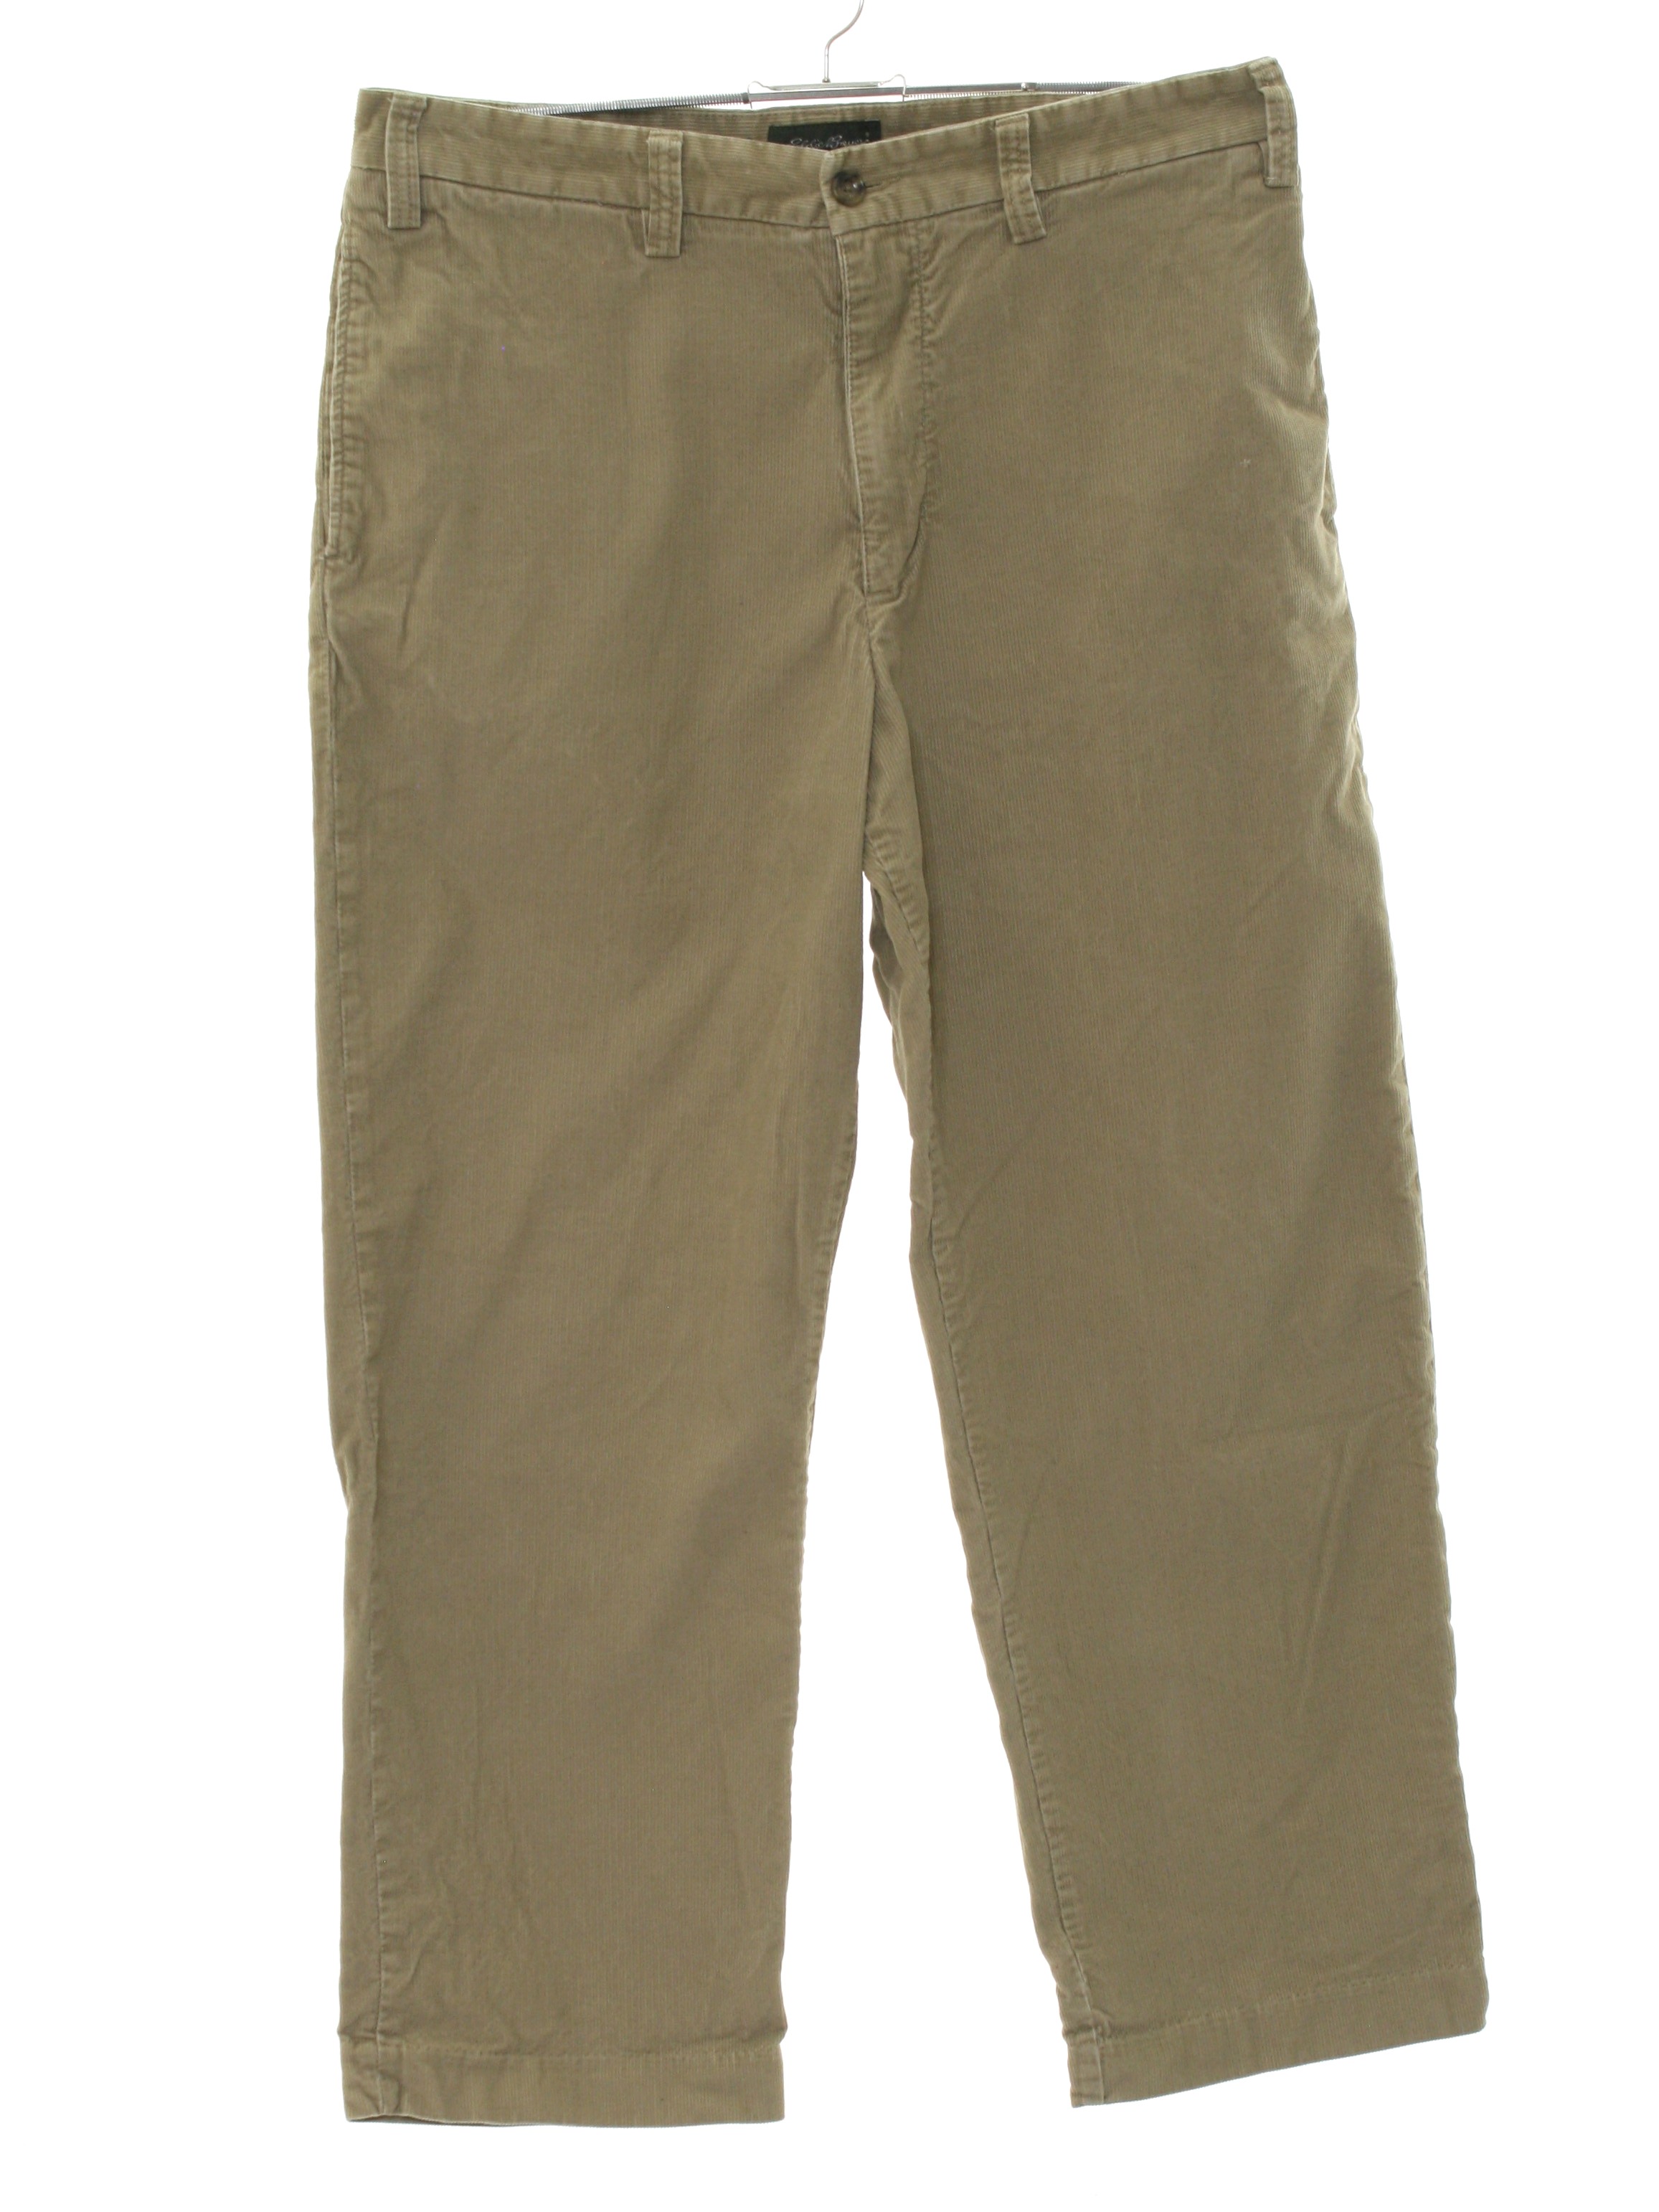 Pants: 90s -Eddie Bauer- Mens tan solid colored cotton corduroy flat ...